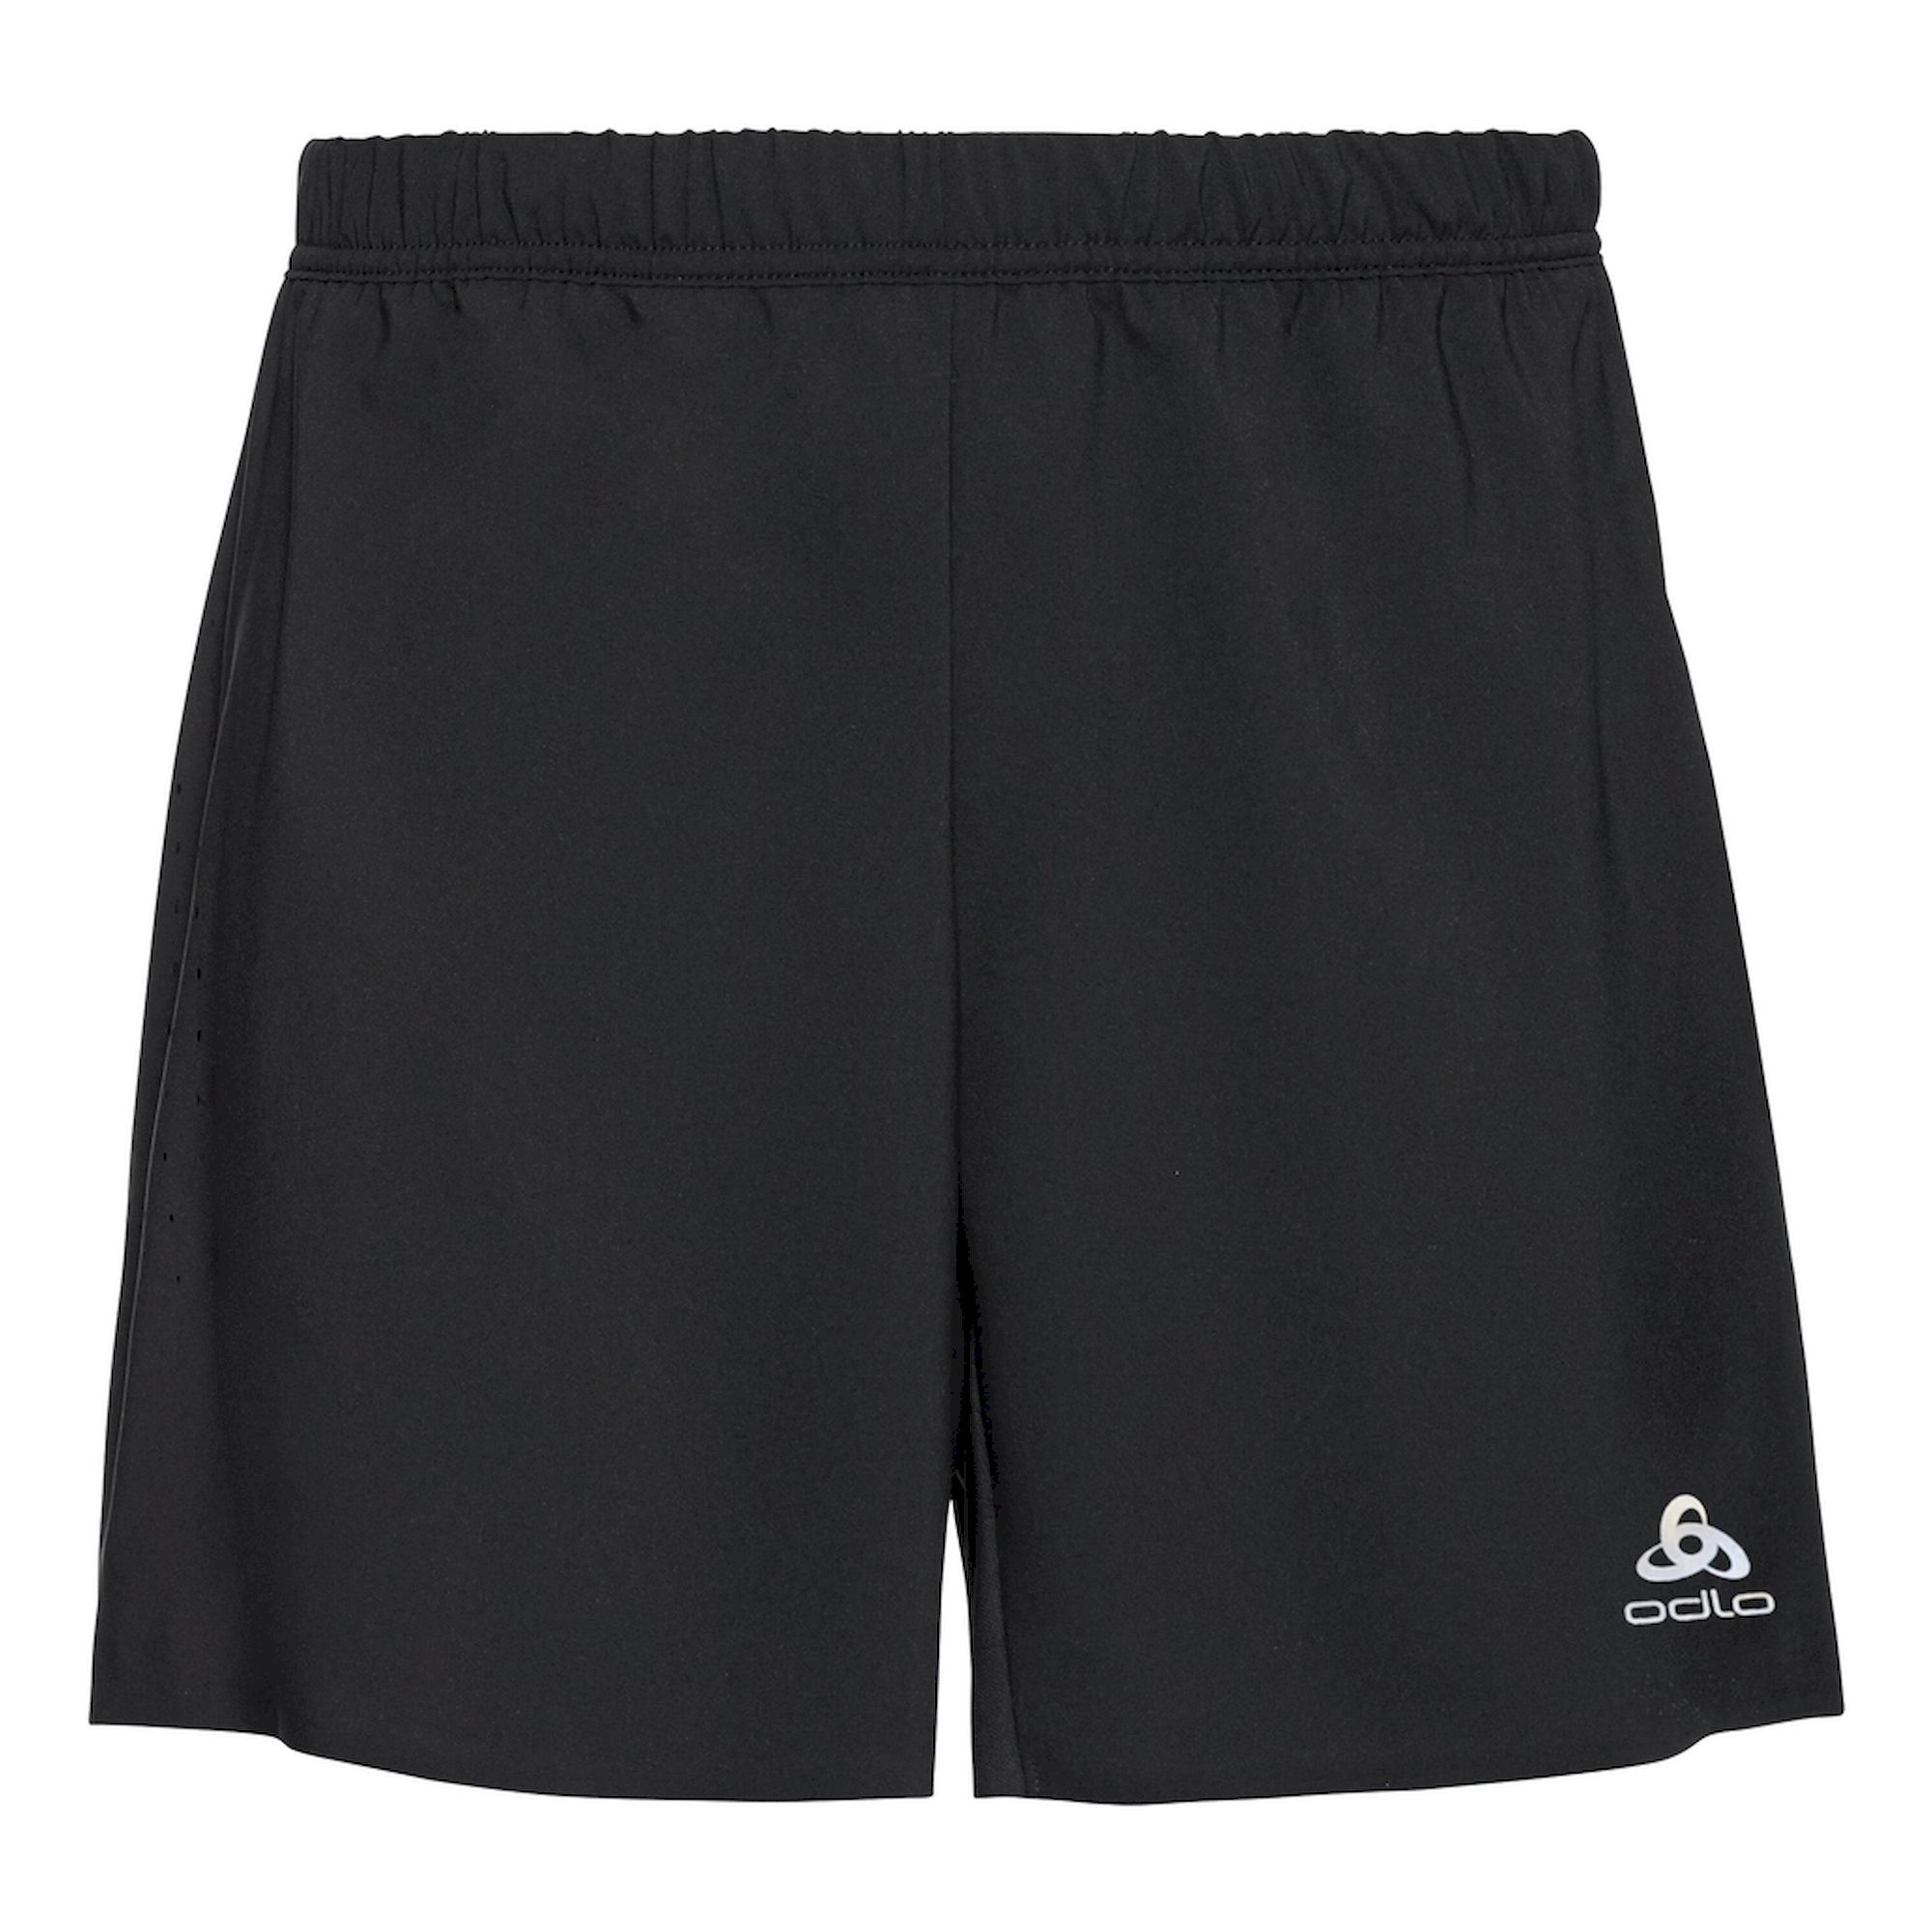 Odlo Zeroweight 5 Inch - Running shorts - Men's